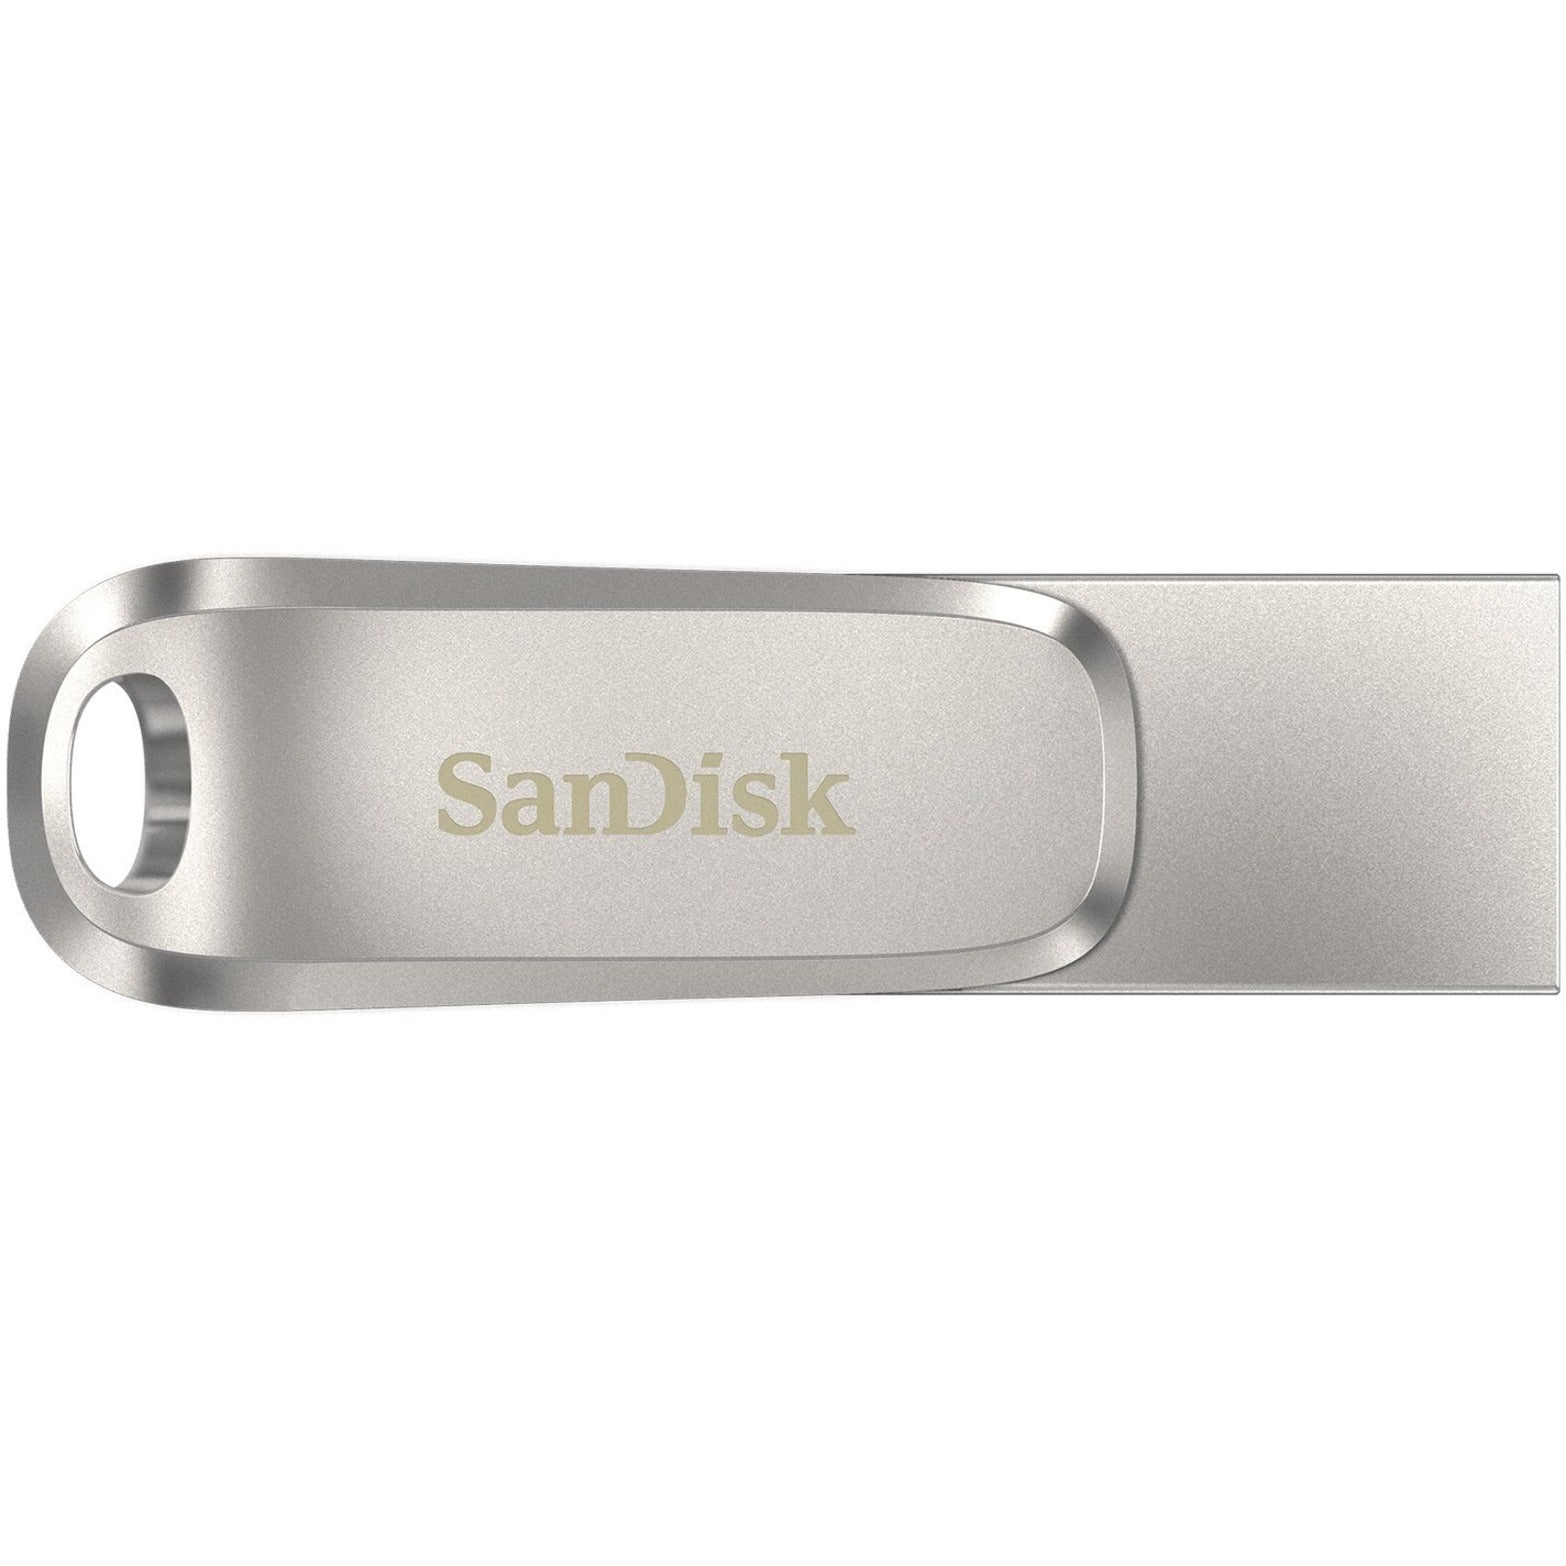 SanDisk SDDDC4-256G-A46 Ultra Dual Drive Luxe USB Type-C Flash Drive 256GB Storage 150 MB/s Read Speed